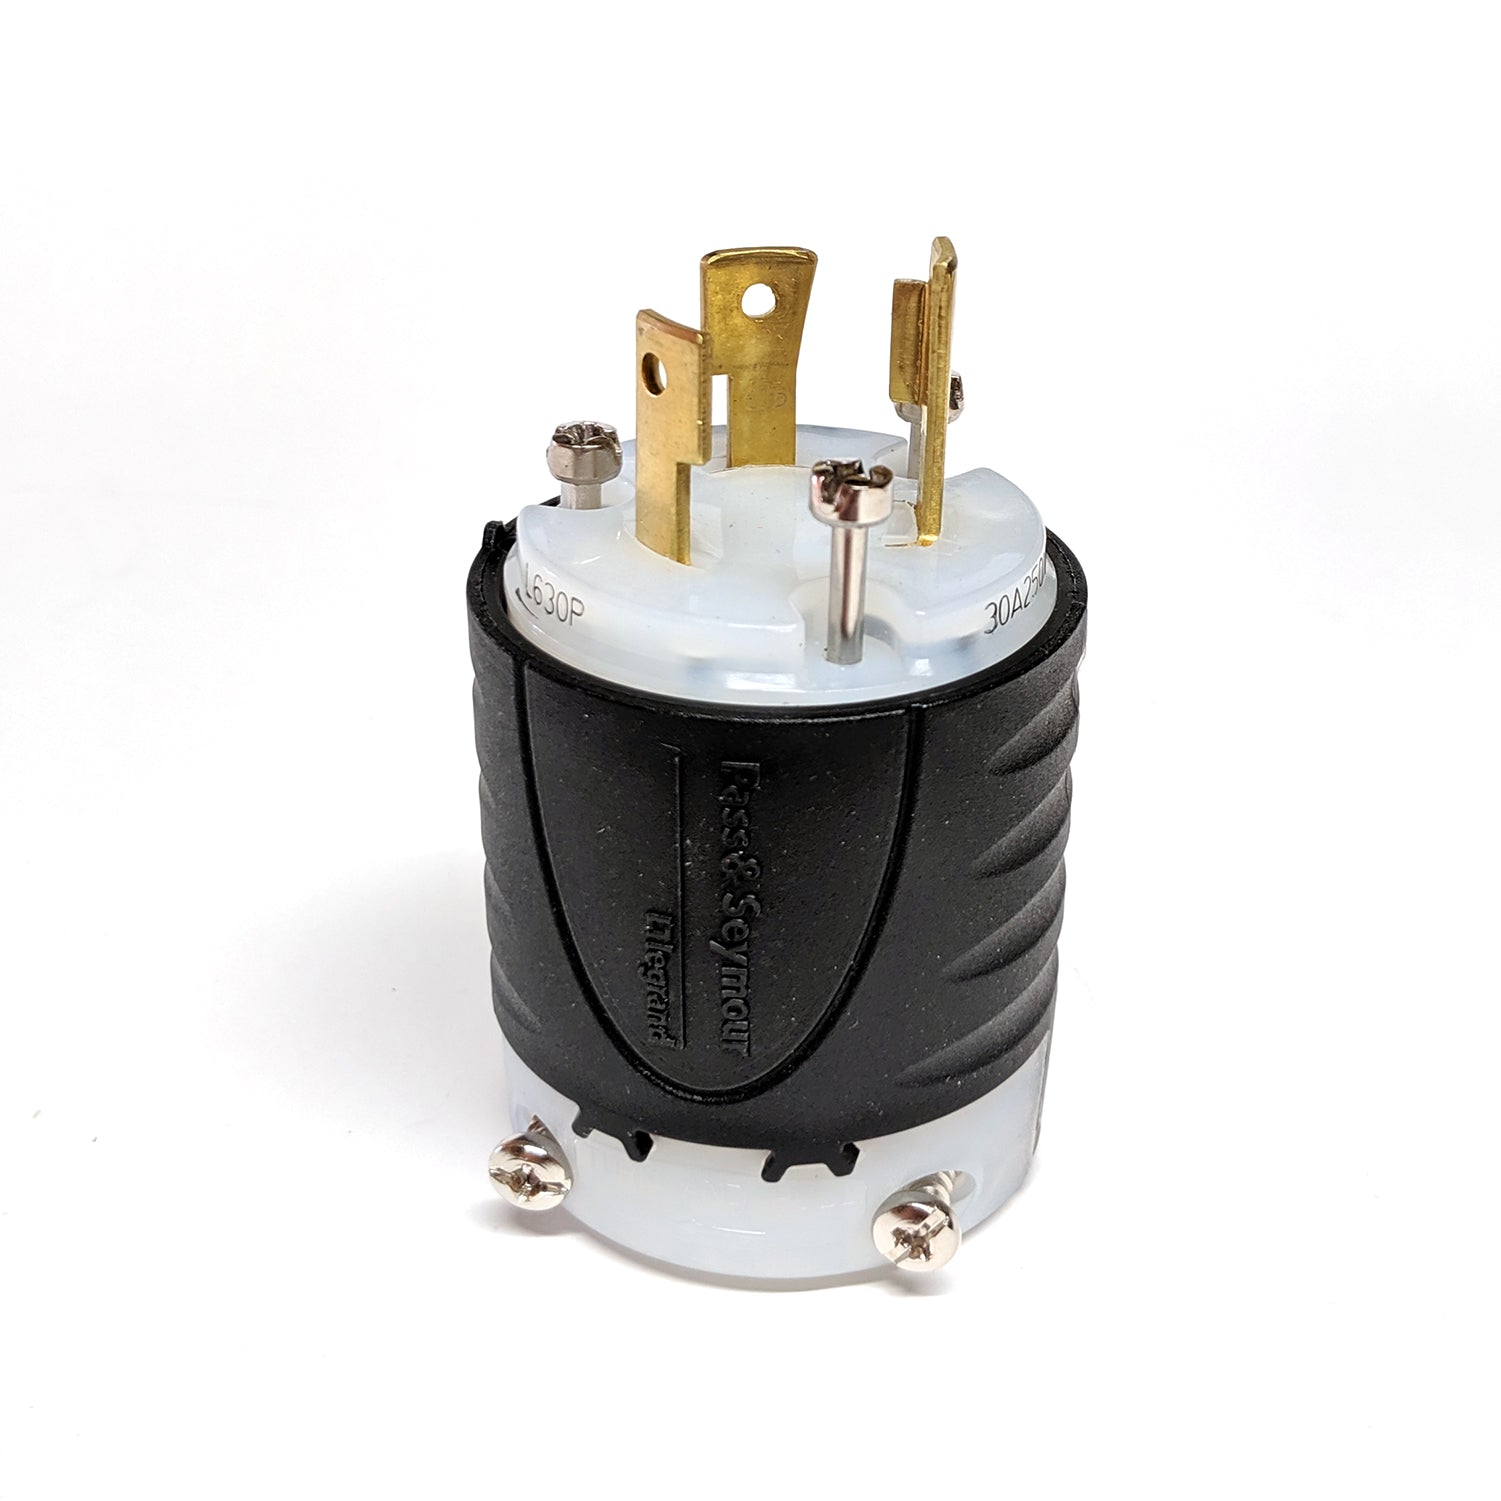 Pass & Seymour twist-locking plug, L6-30P Plug